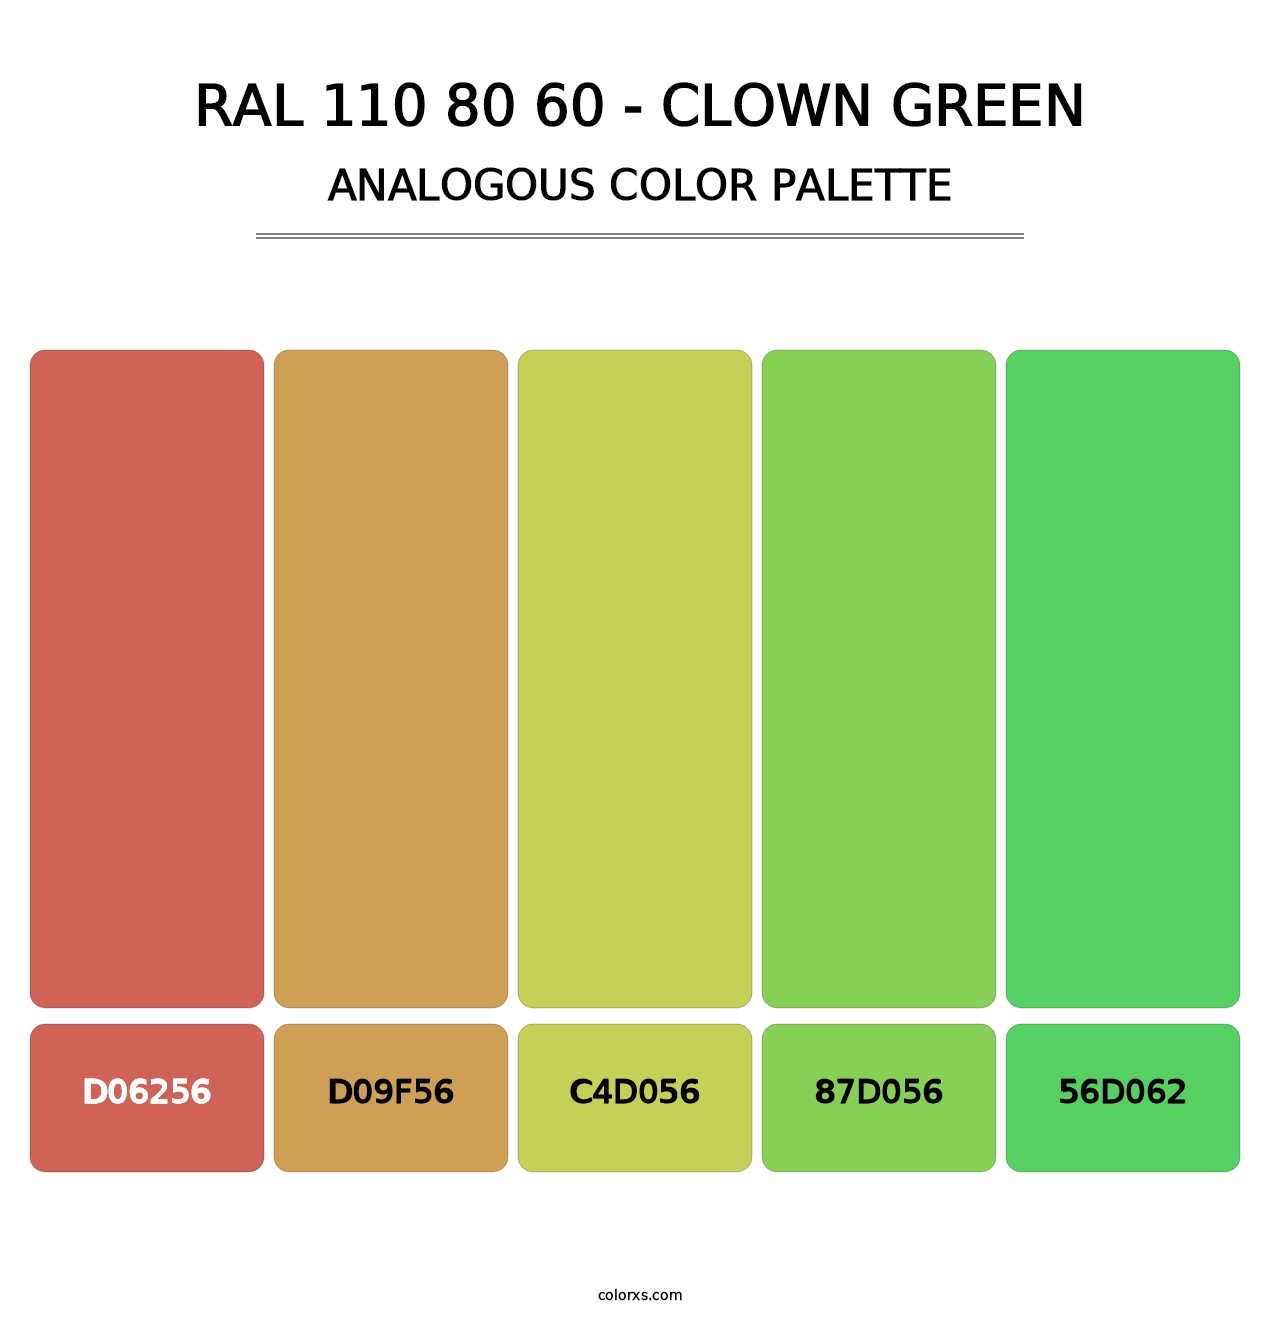 RAL 110 80 60 - Clown Green - Analogous Color Palette